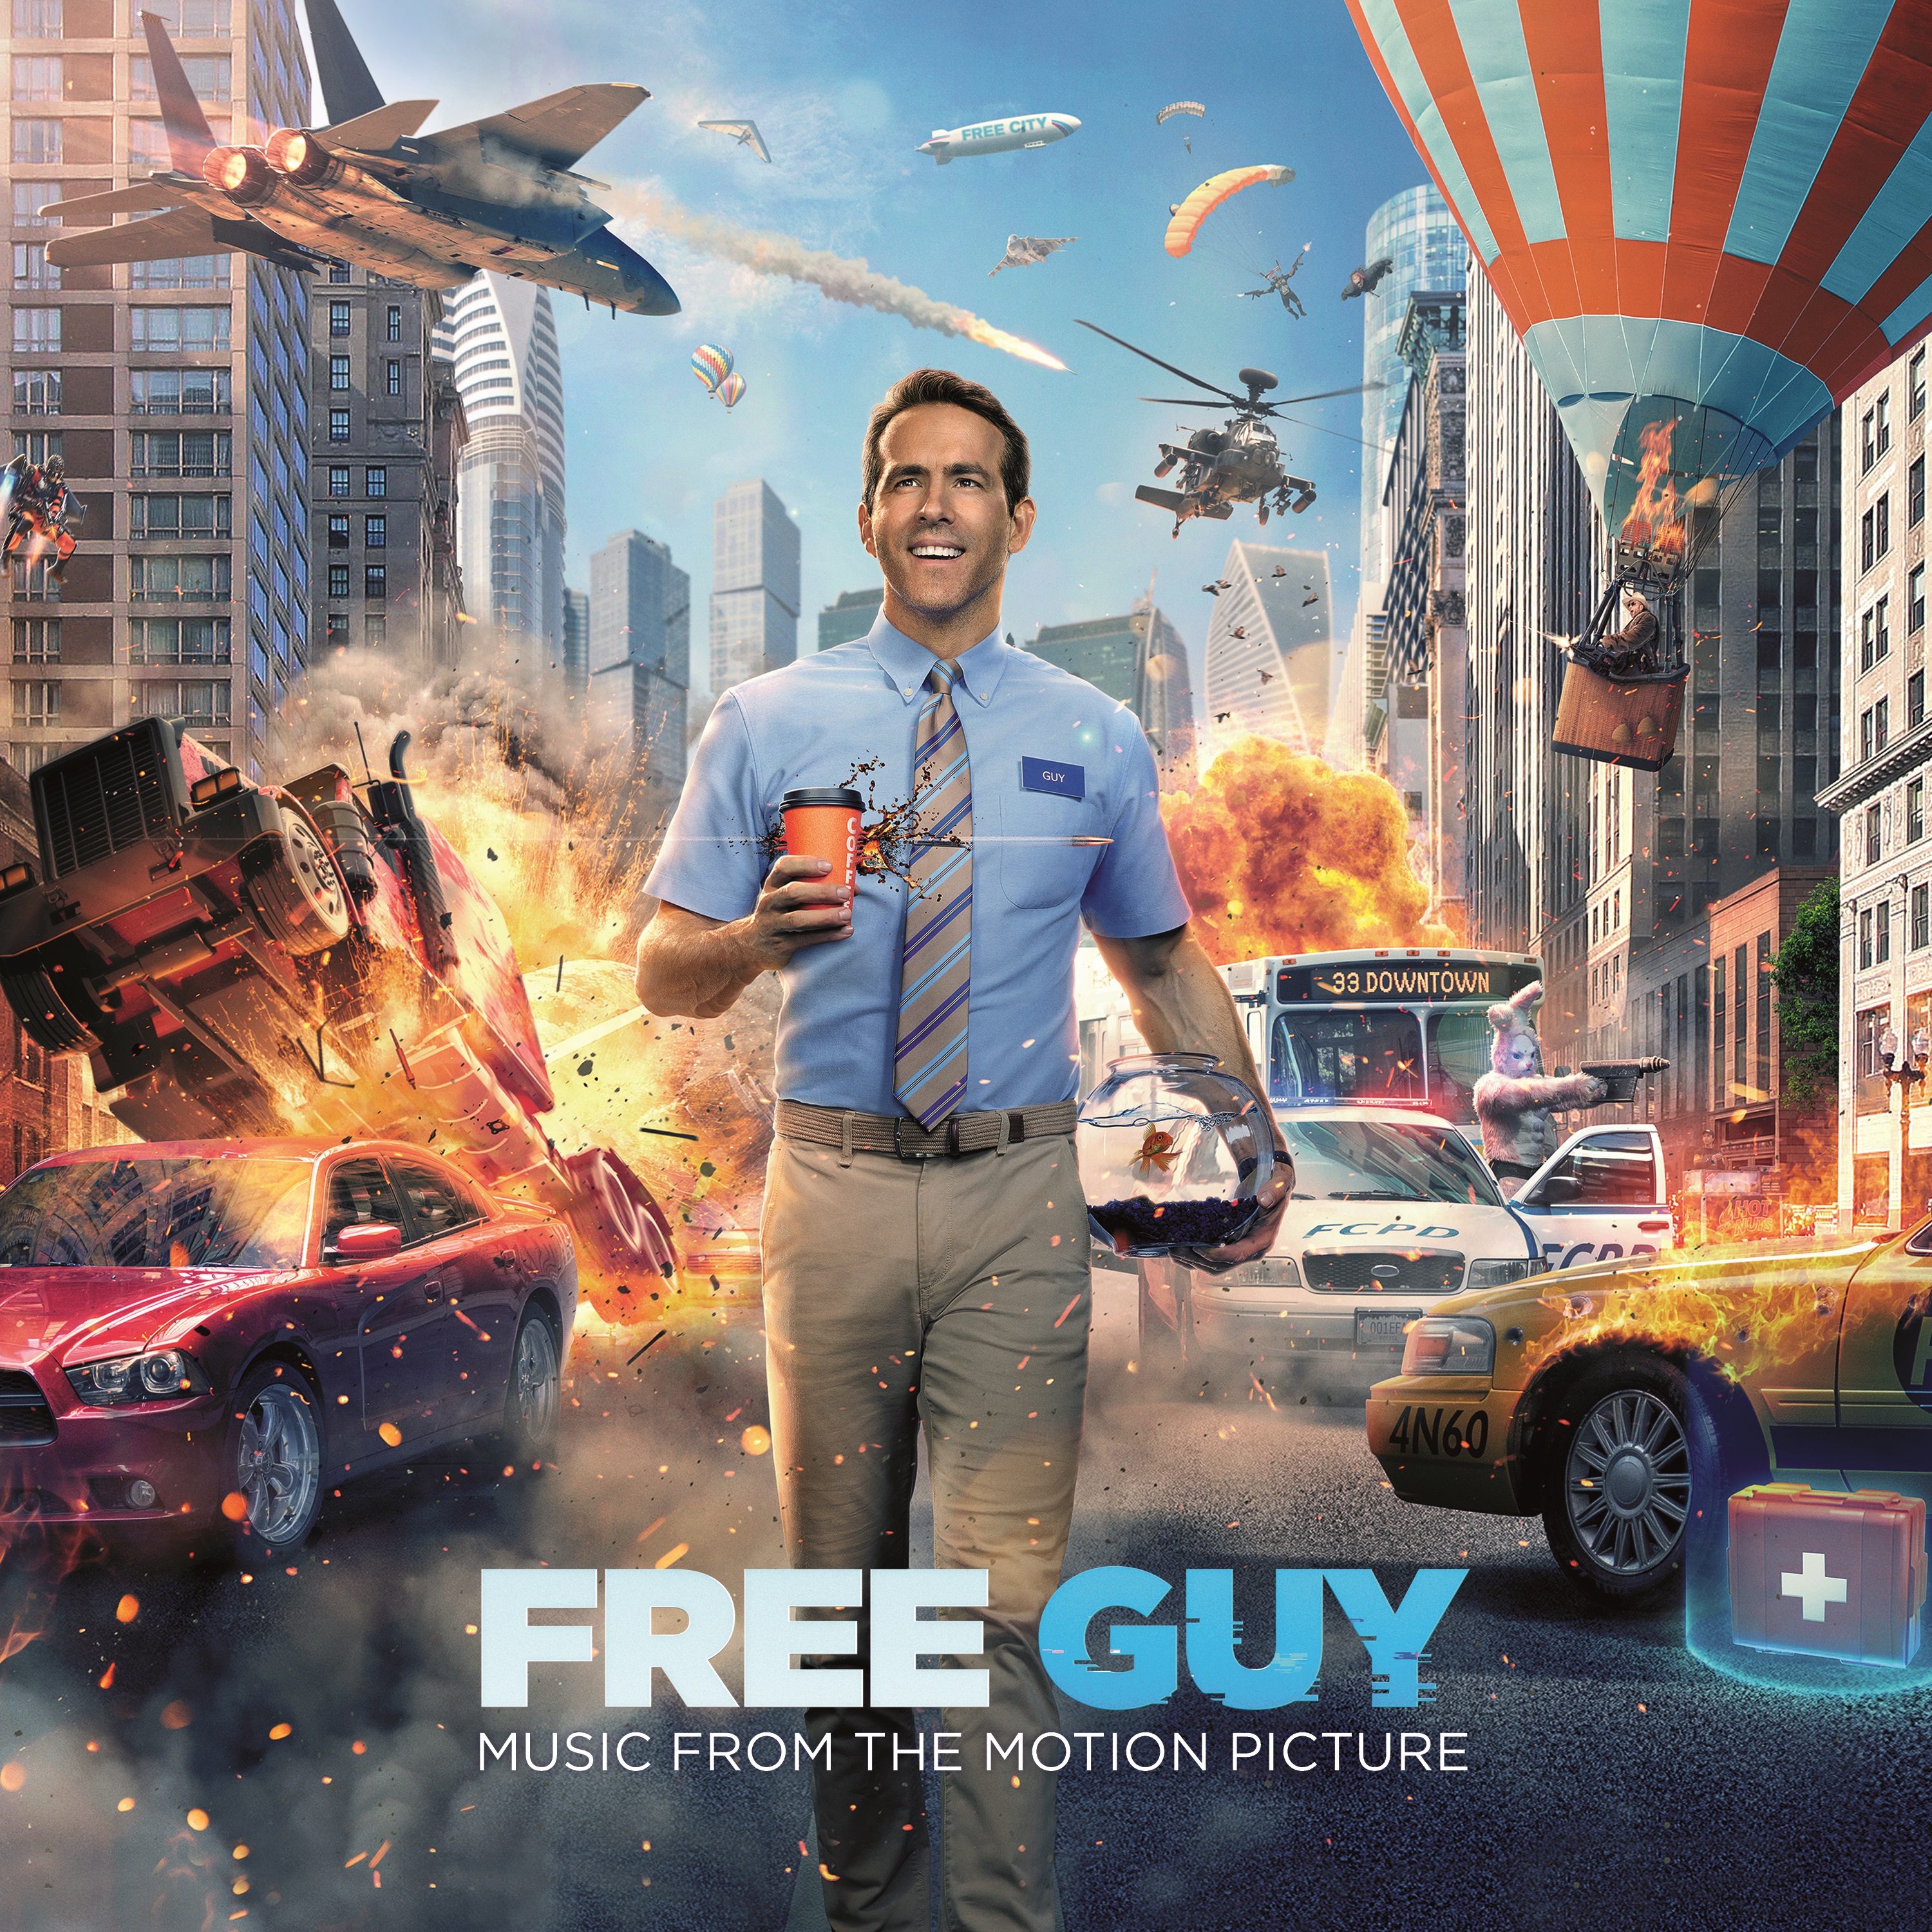 free guy posters reddit